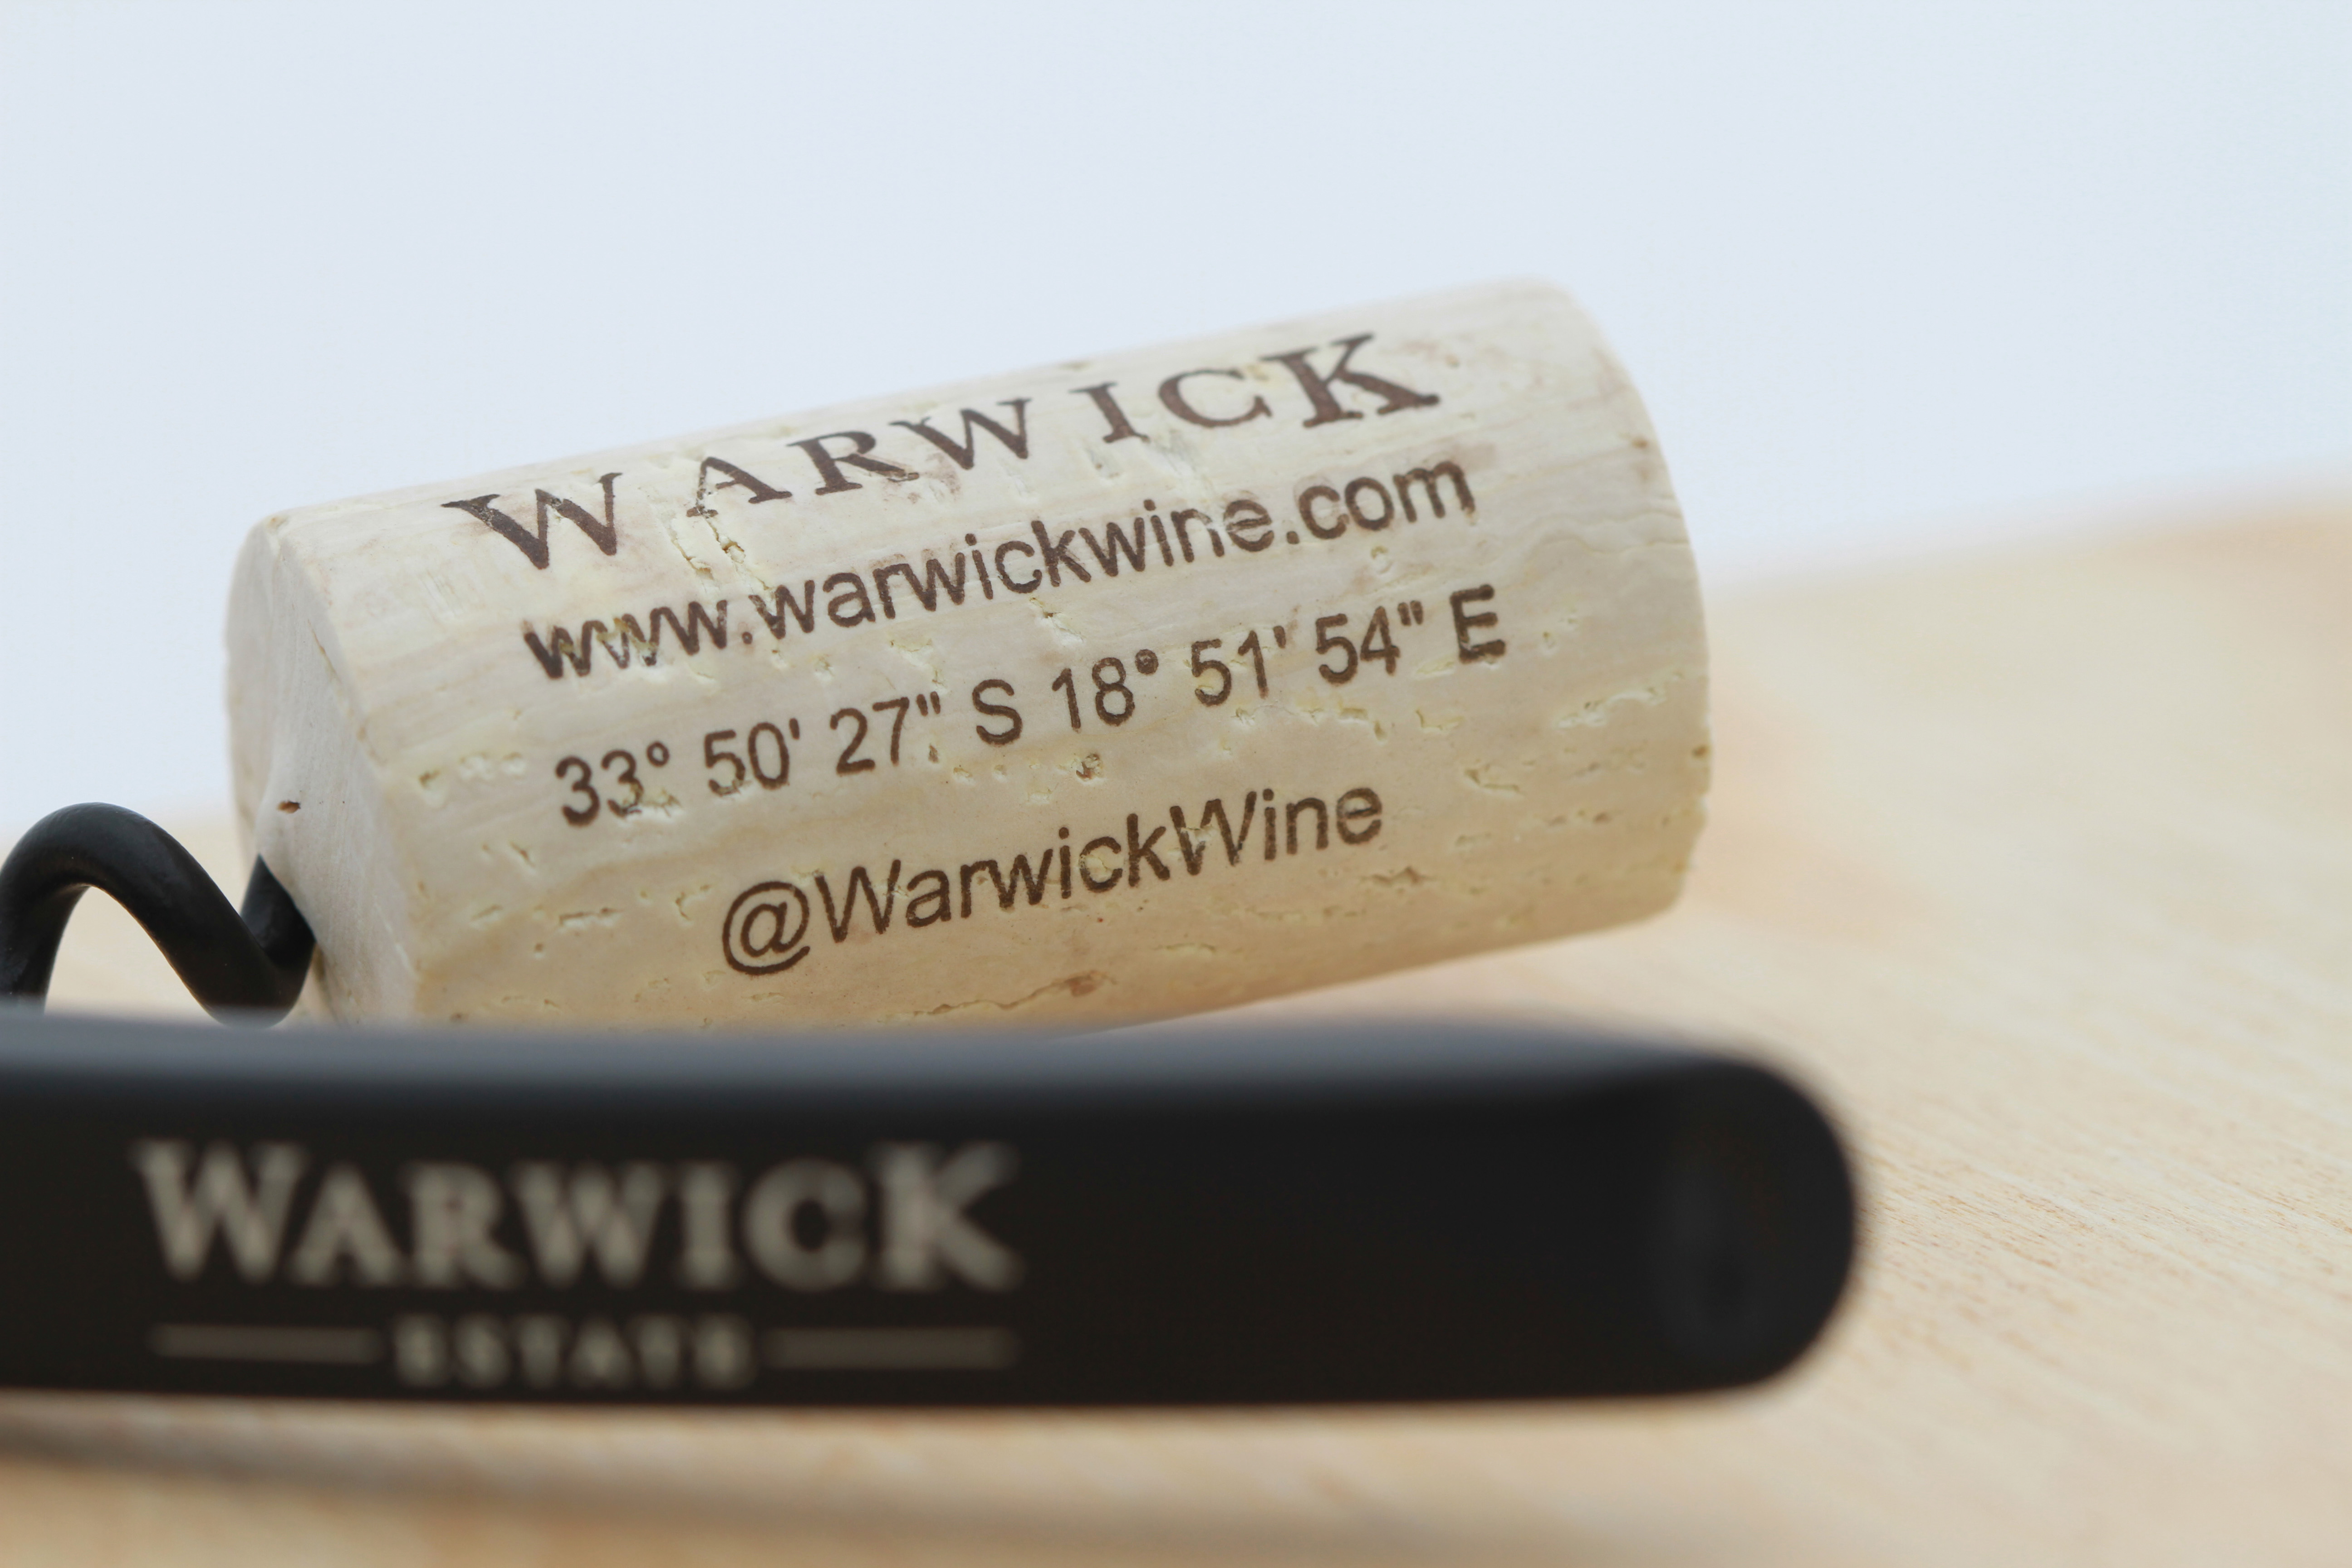 The Warwick Winery Twitter cork